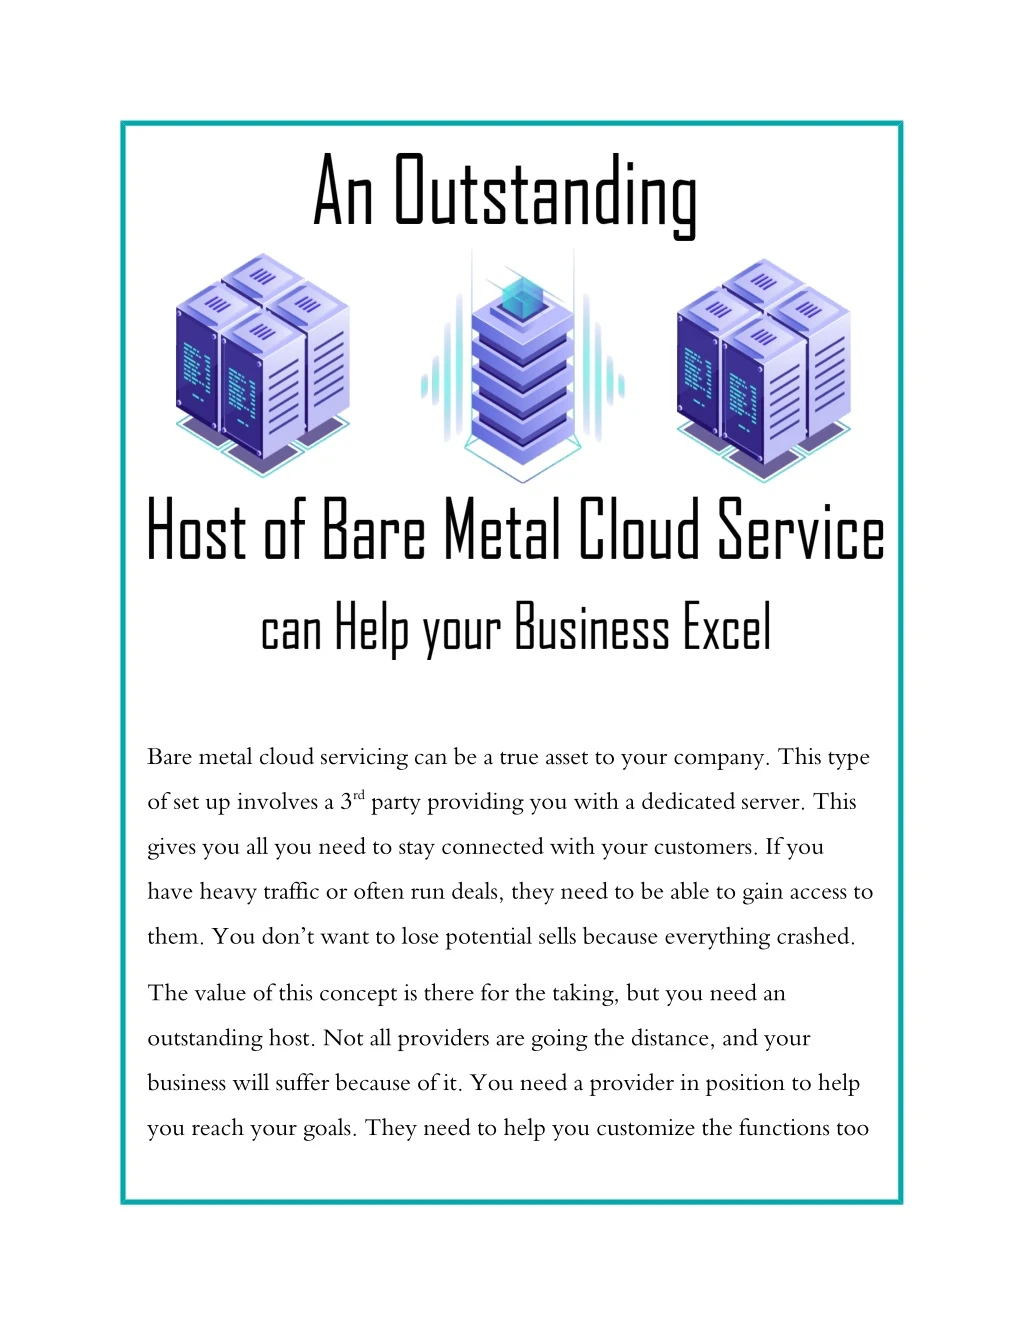 bare metal cloud servicing can be a true asset